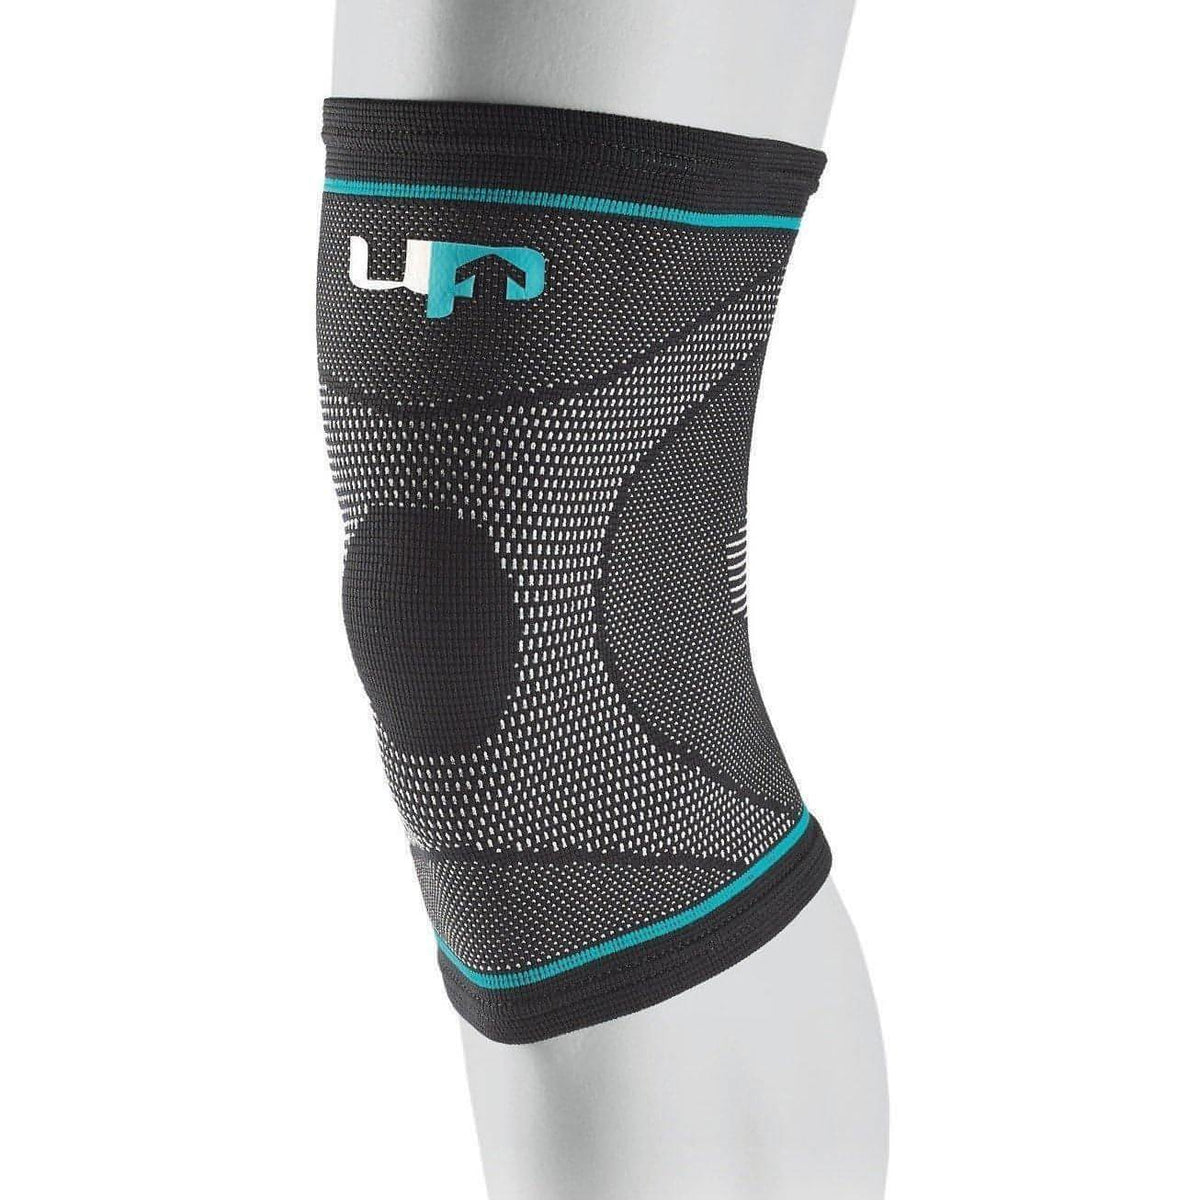 Ultimate Performance Elastic Knee Support UP5150 Black/Blue